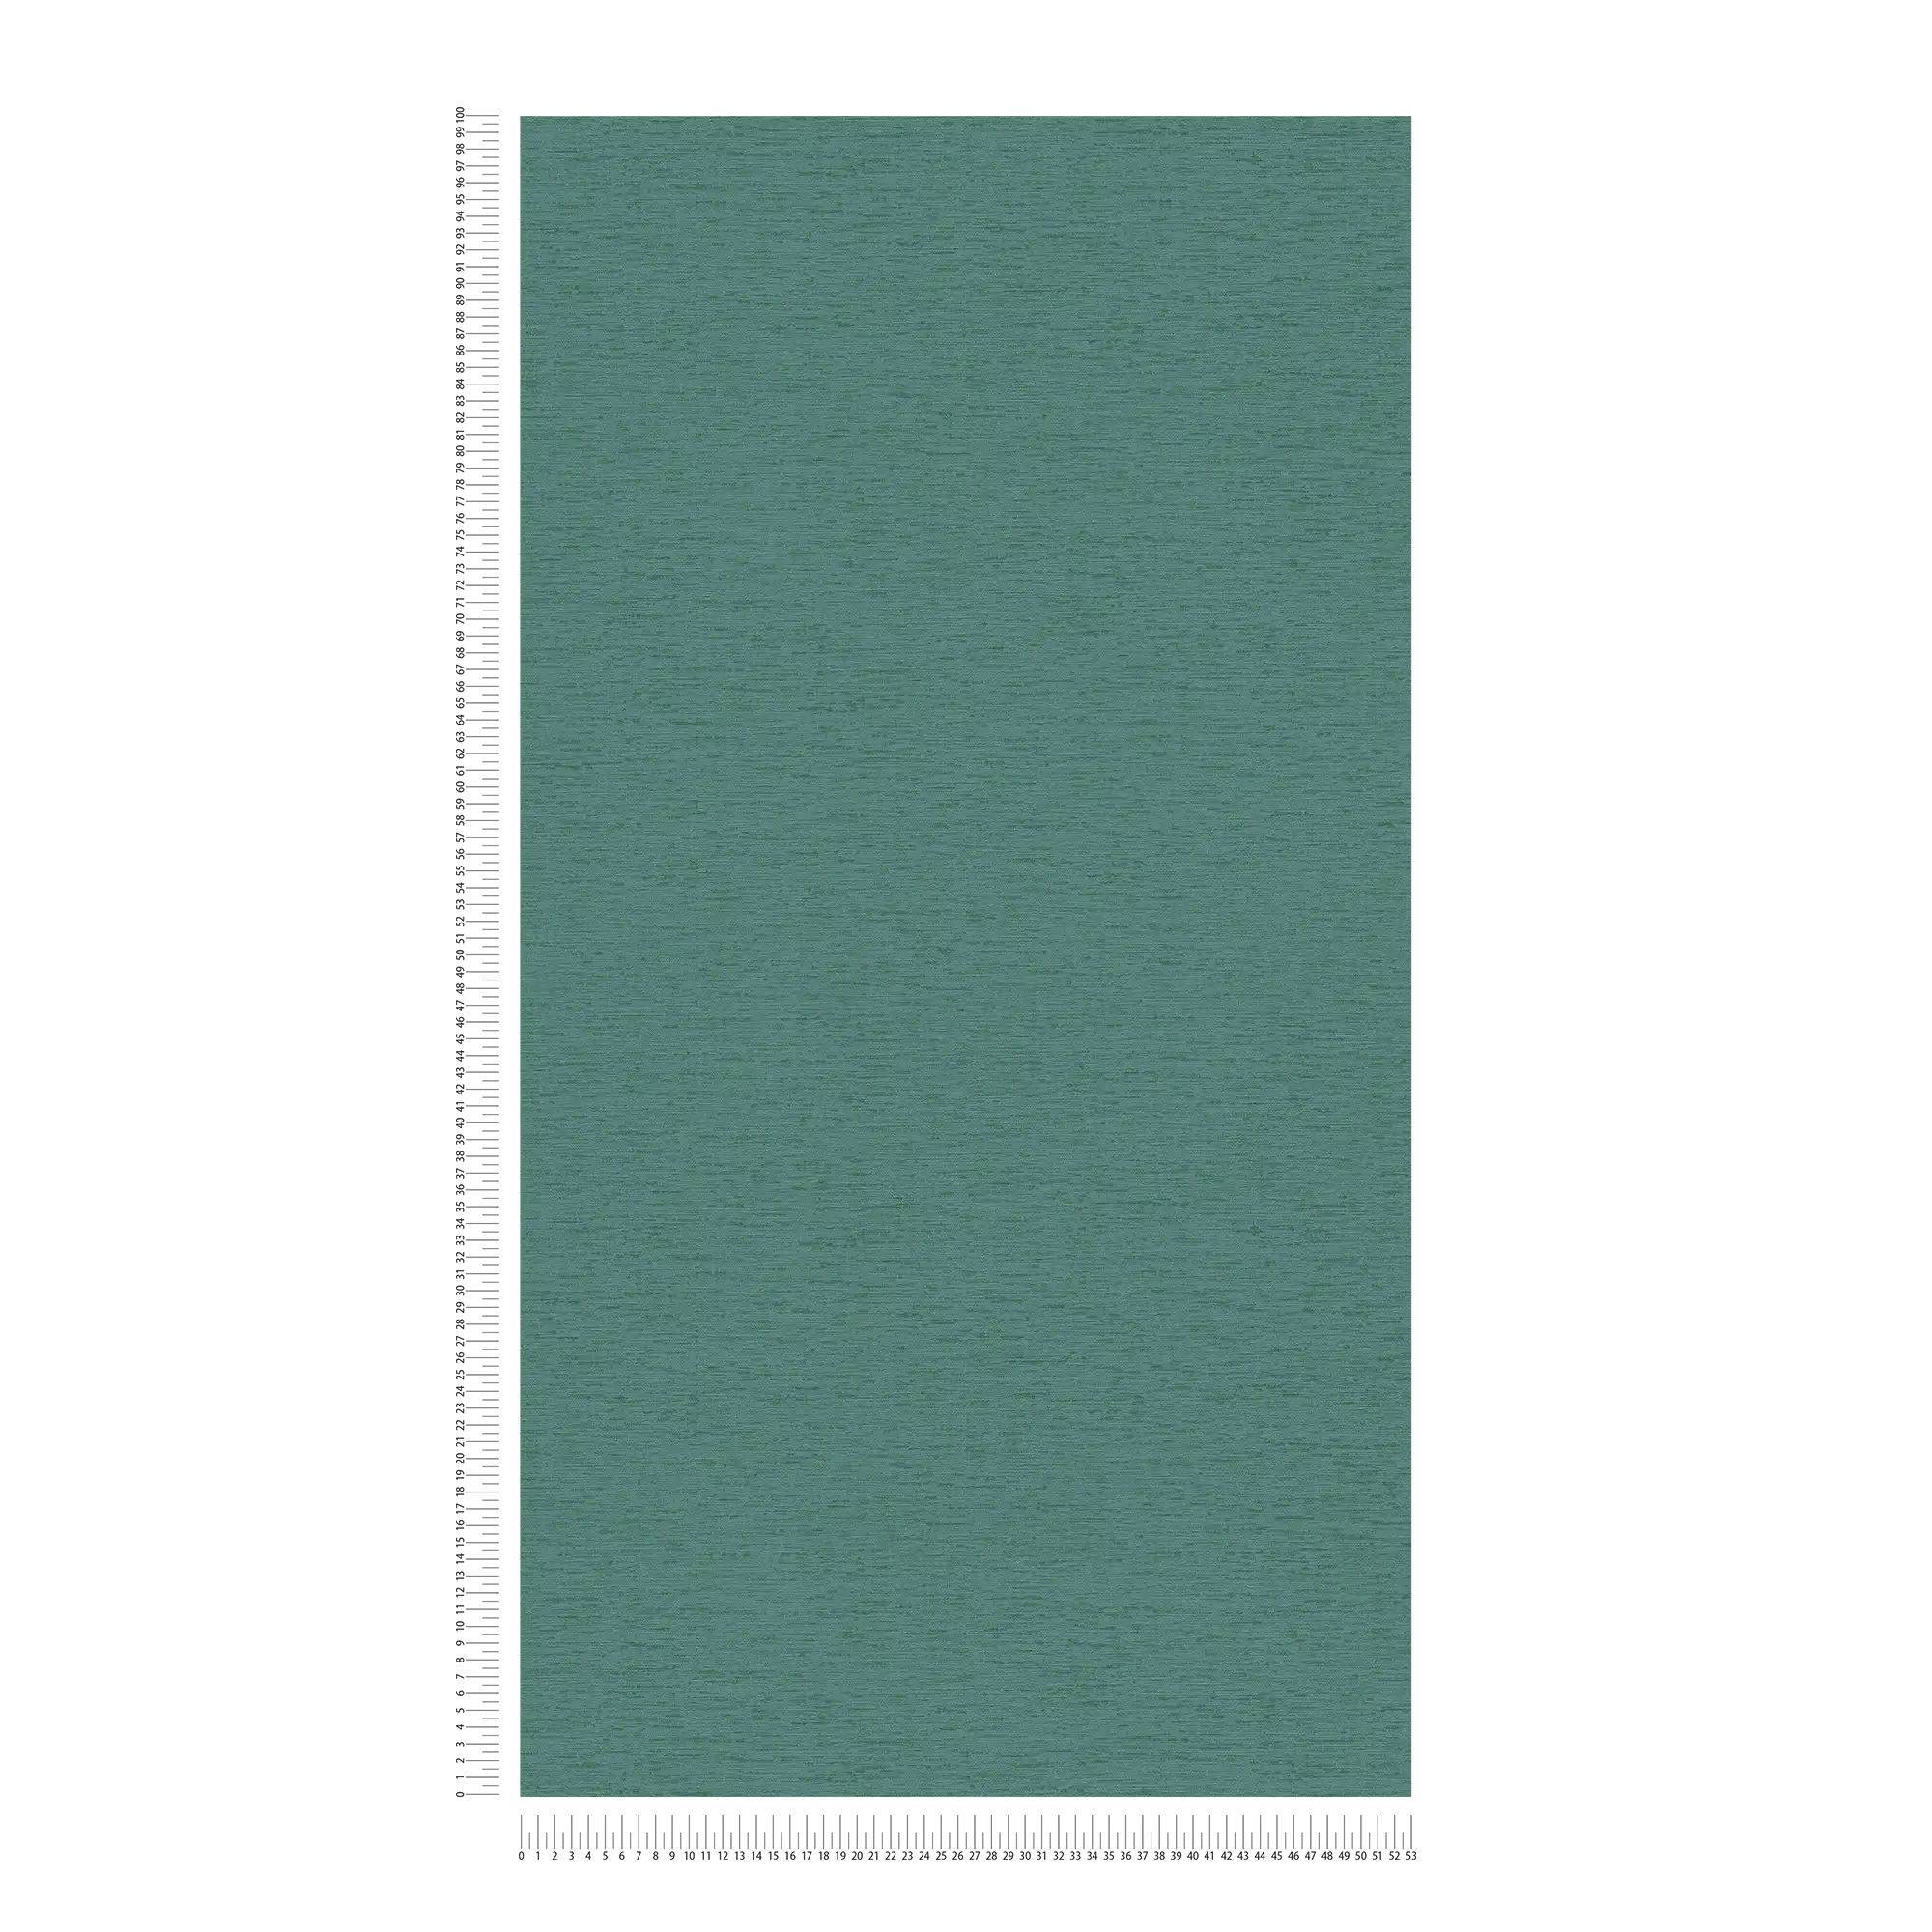             Carta da parati non tessuta liscio con struttura in tessuto, opaco - petrolio, verde
        